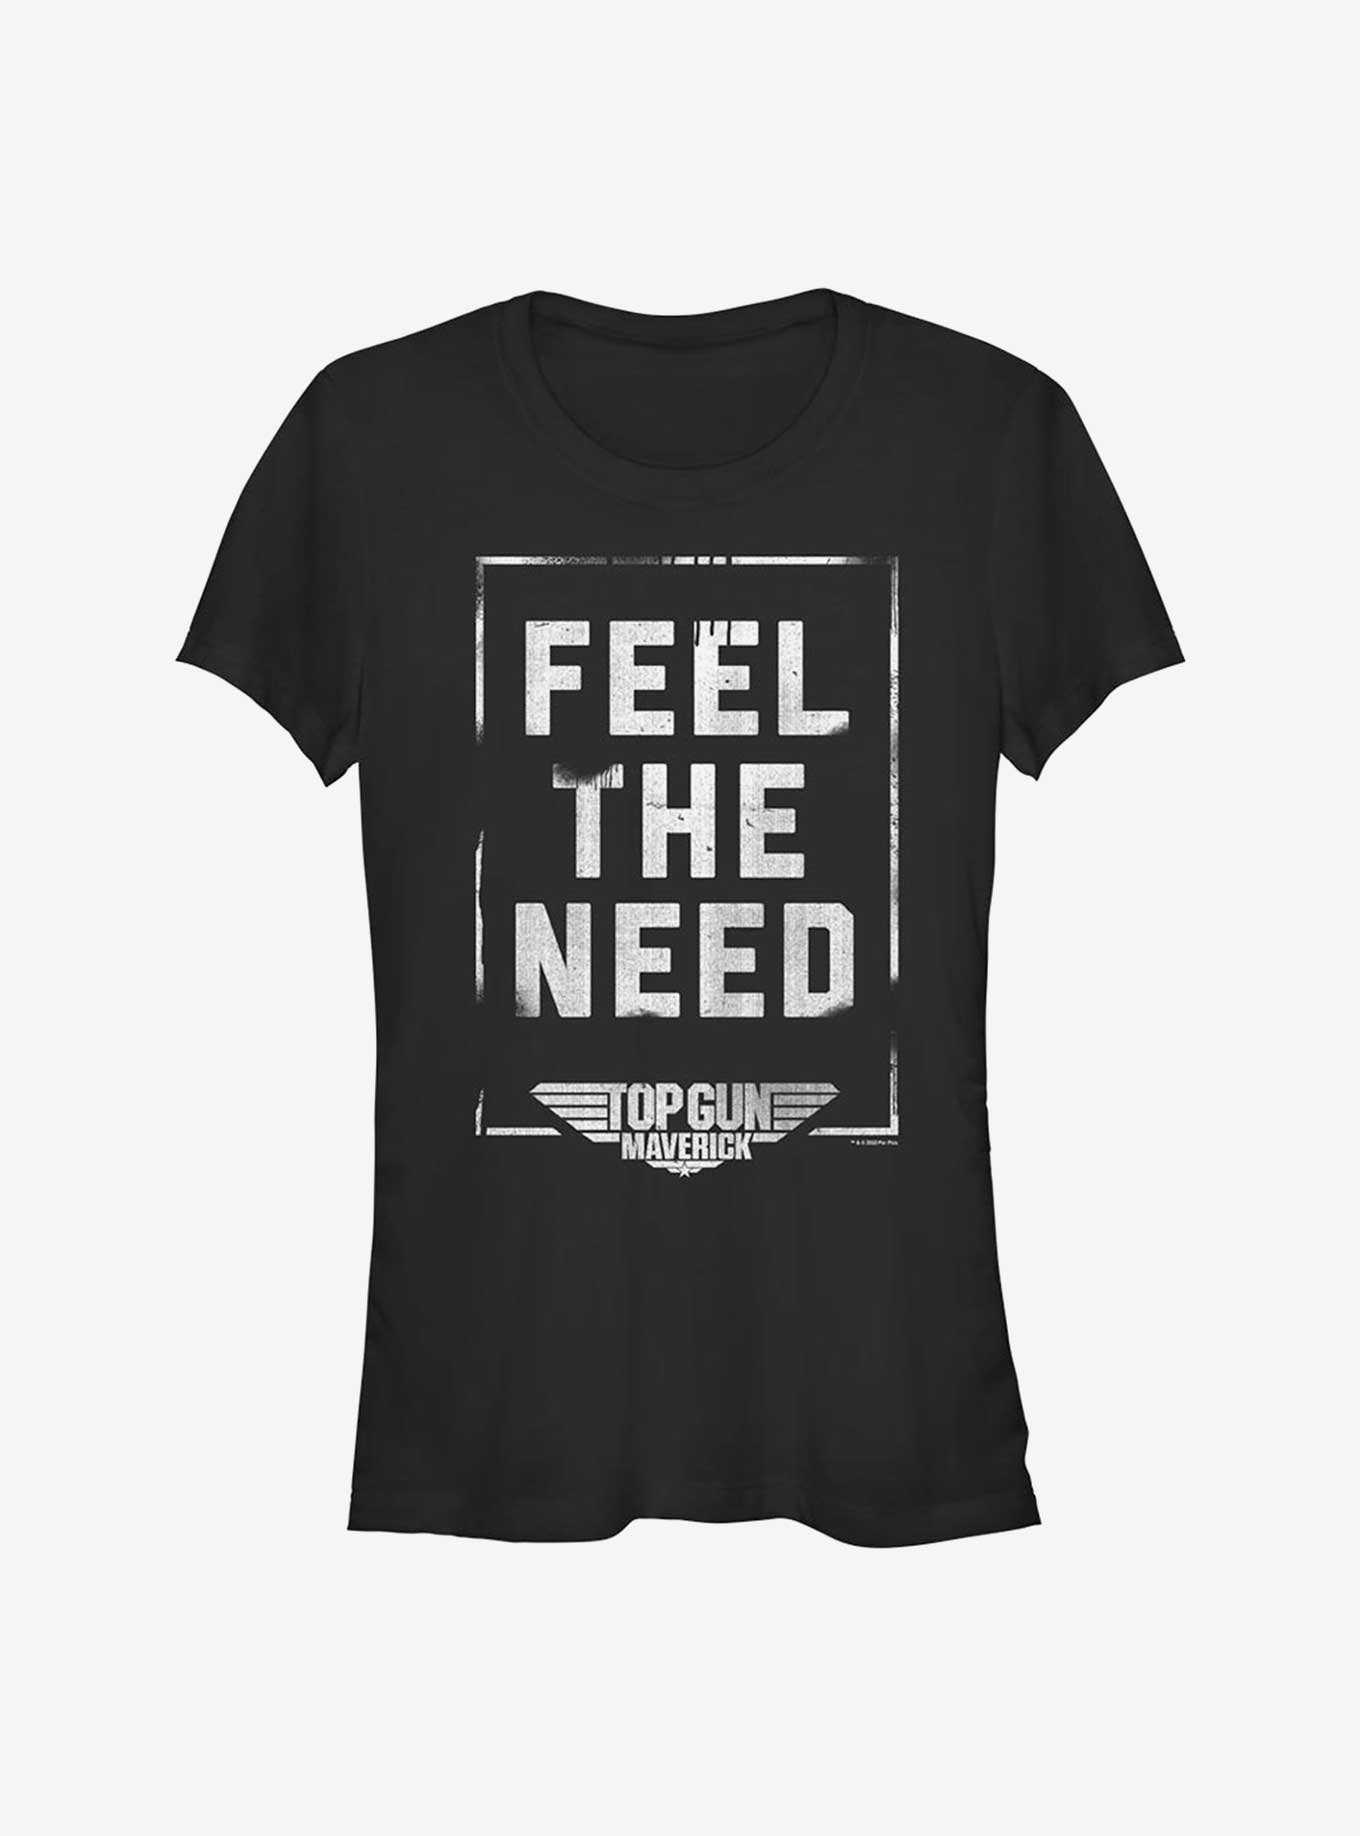 Top Gun Maverick Feel The Need Girls T-Shirt, , hi-res